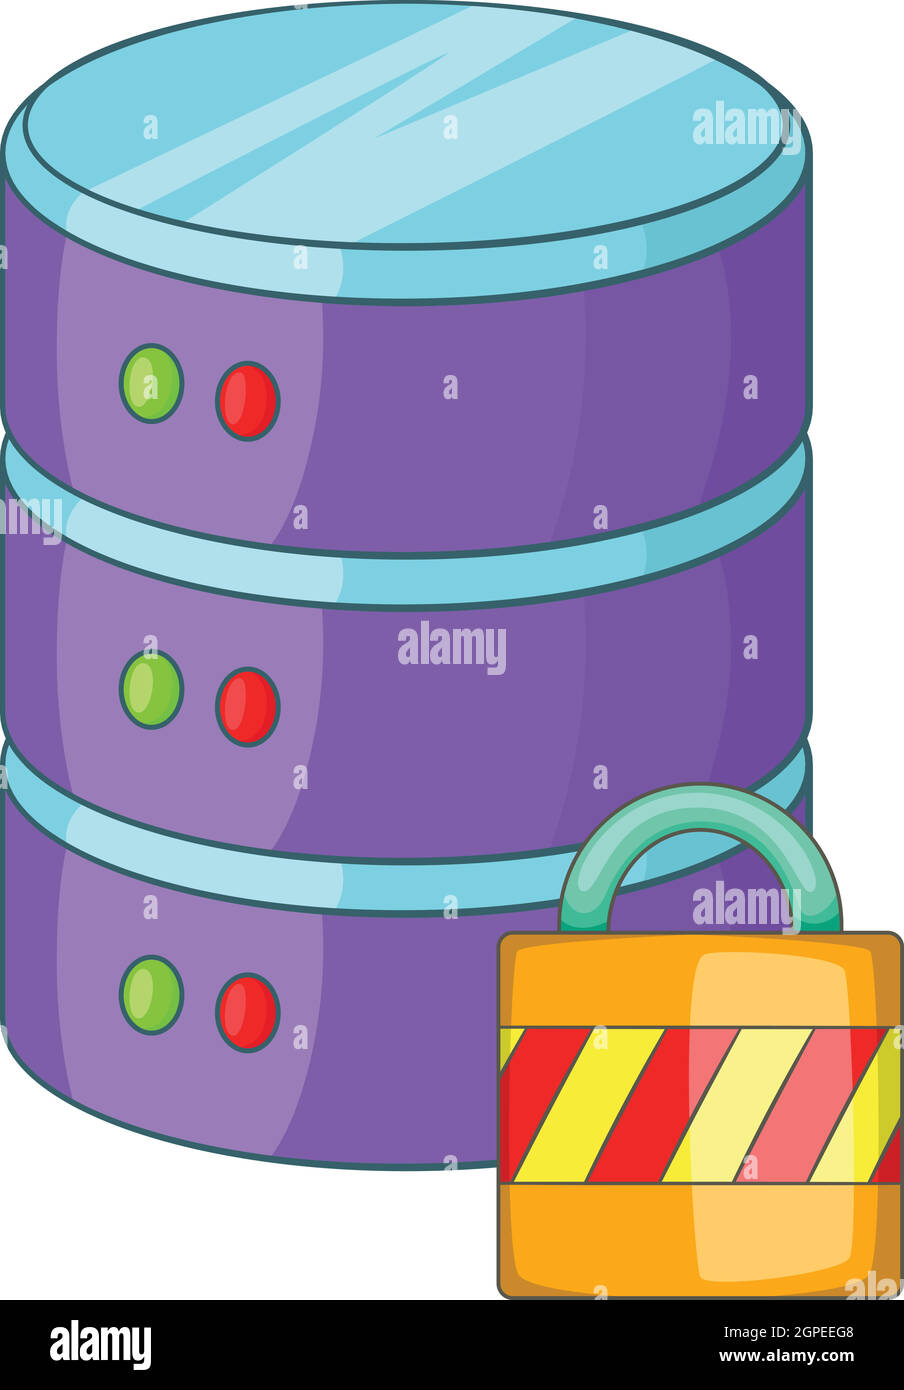 Data storage security icon, cartoon style Stock Vector